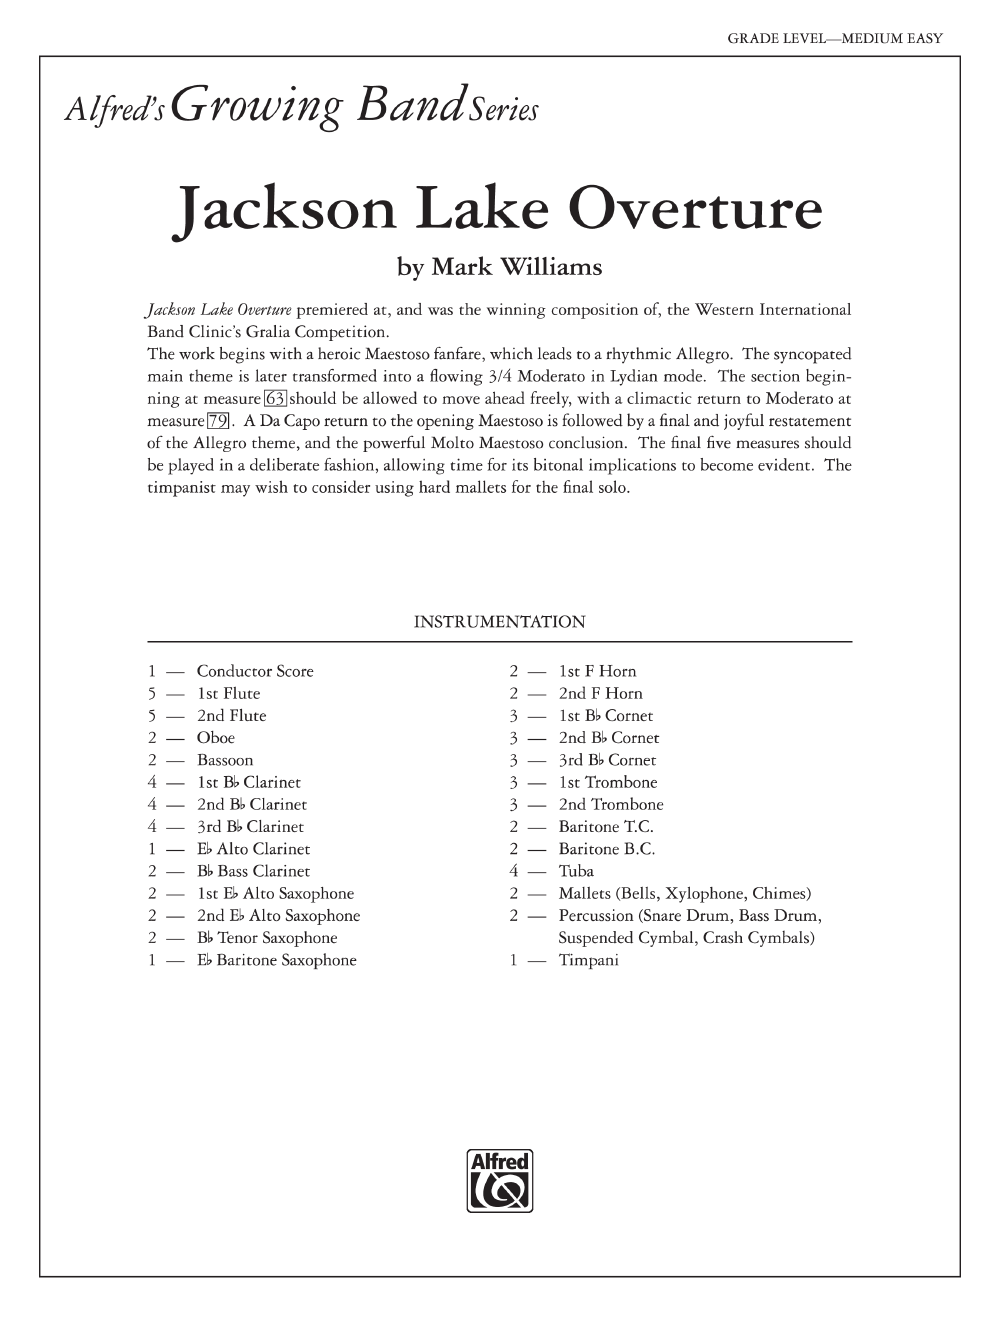 JACKSON LAKE OVERTURE SCORE